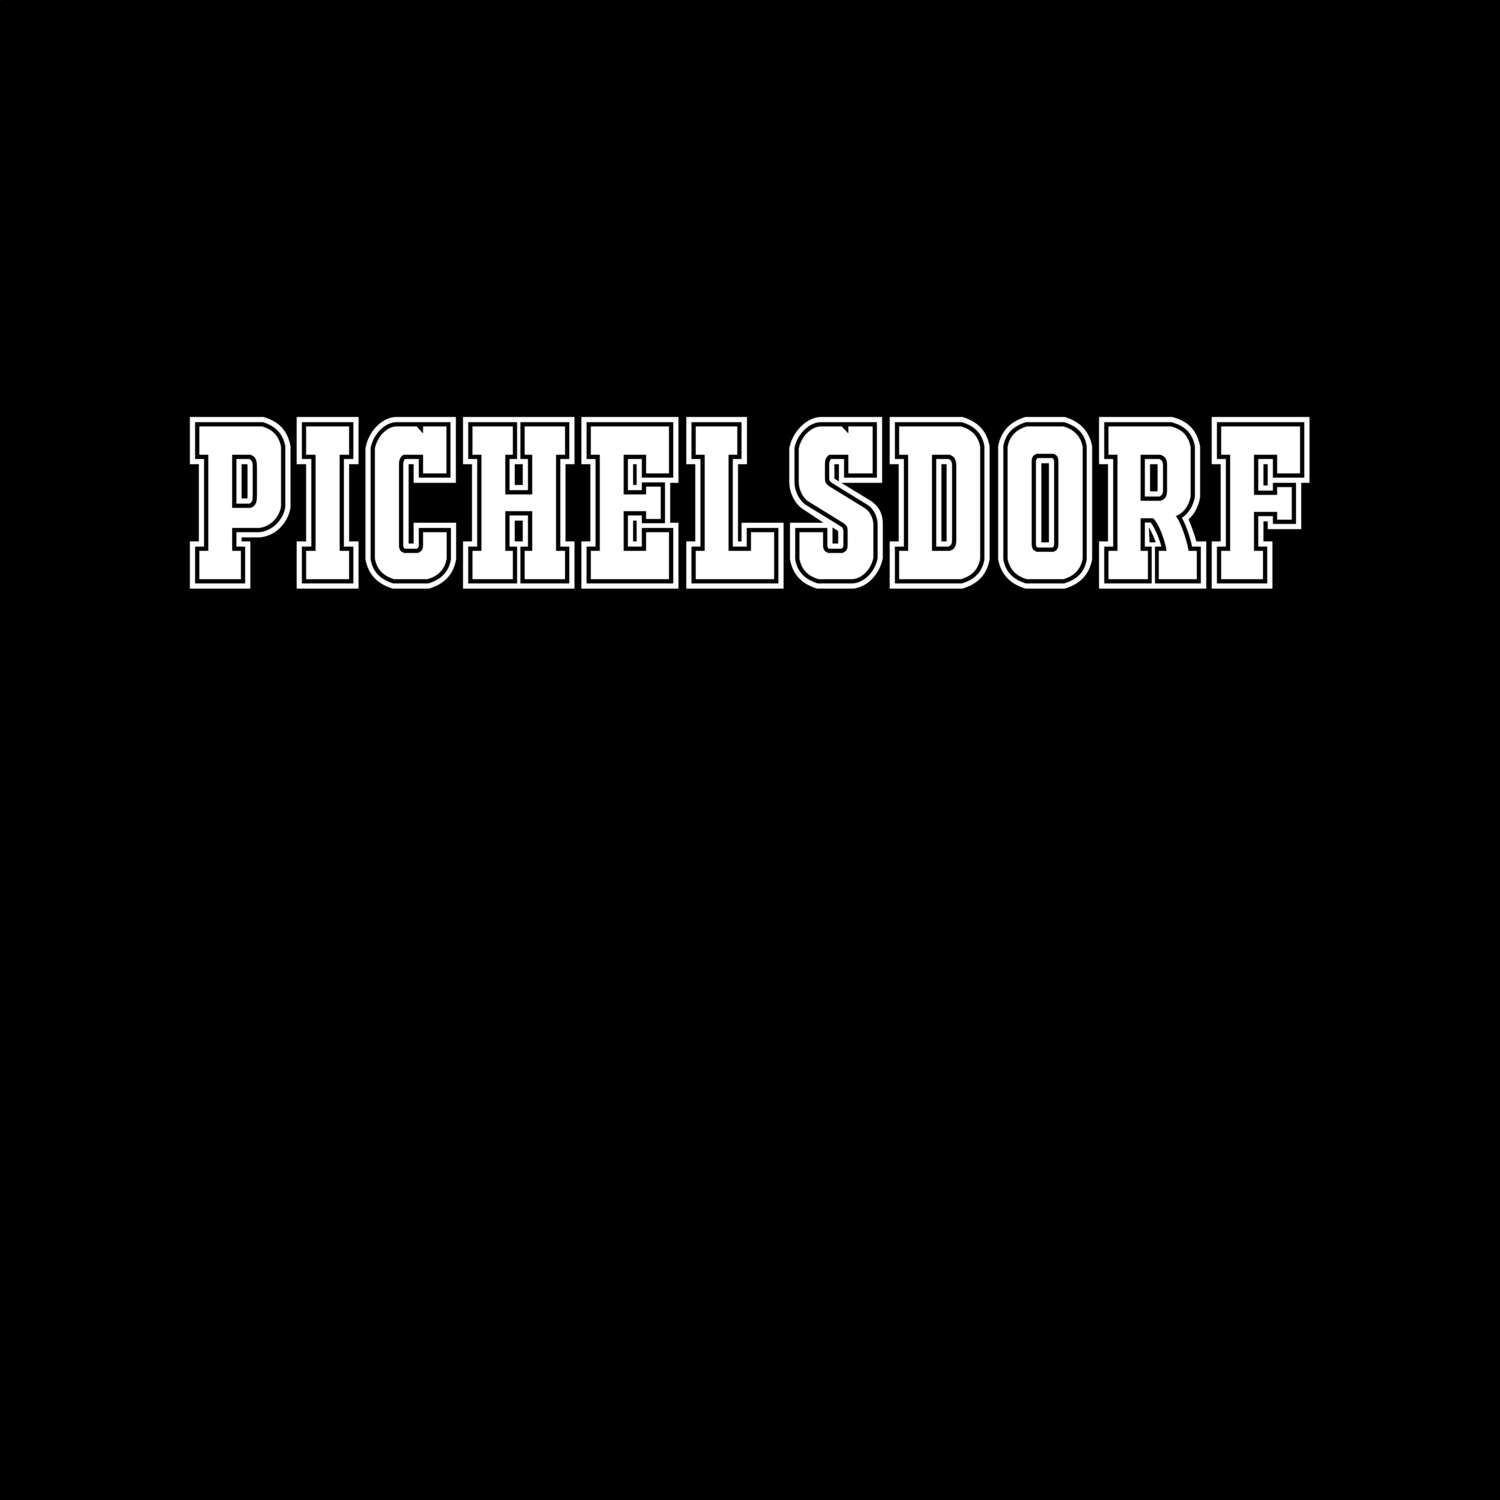 Pichelsdorf T-Shirt »Classic«